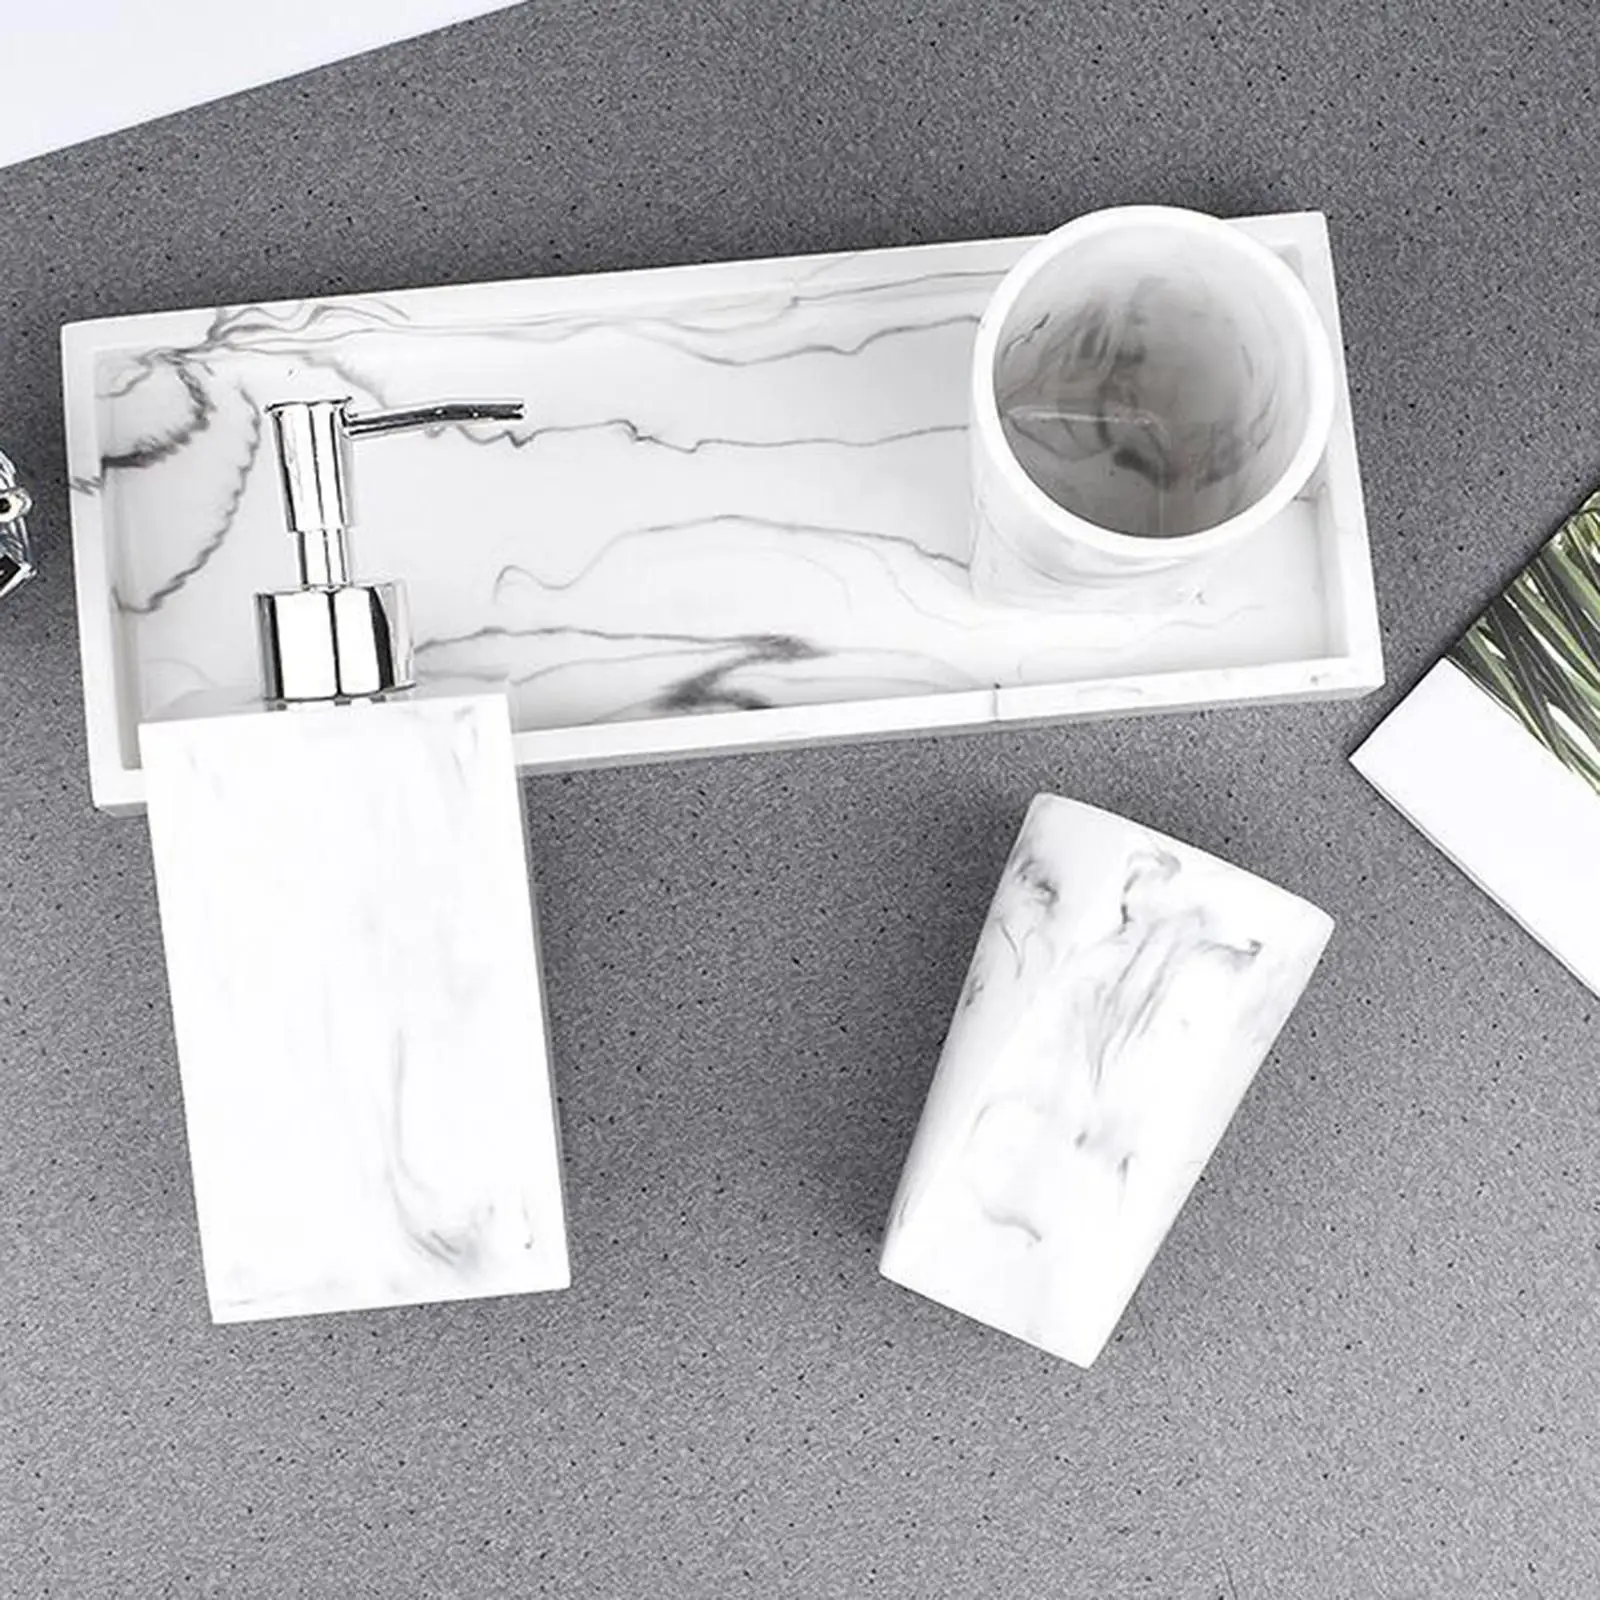 Bathroom Accessories Set  Dispenser Tray Modern Essential Set for Bathroom Counter Dorm Decoration Easy Clean Practical